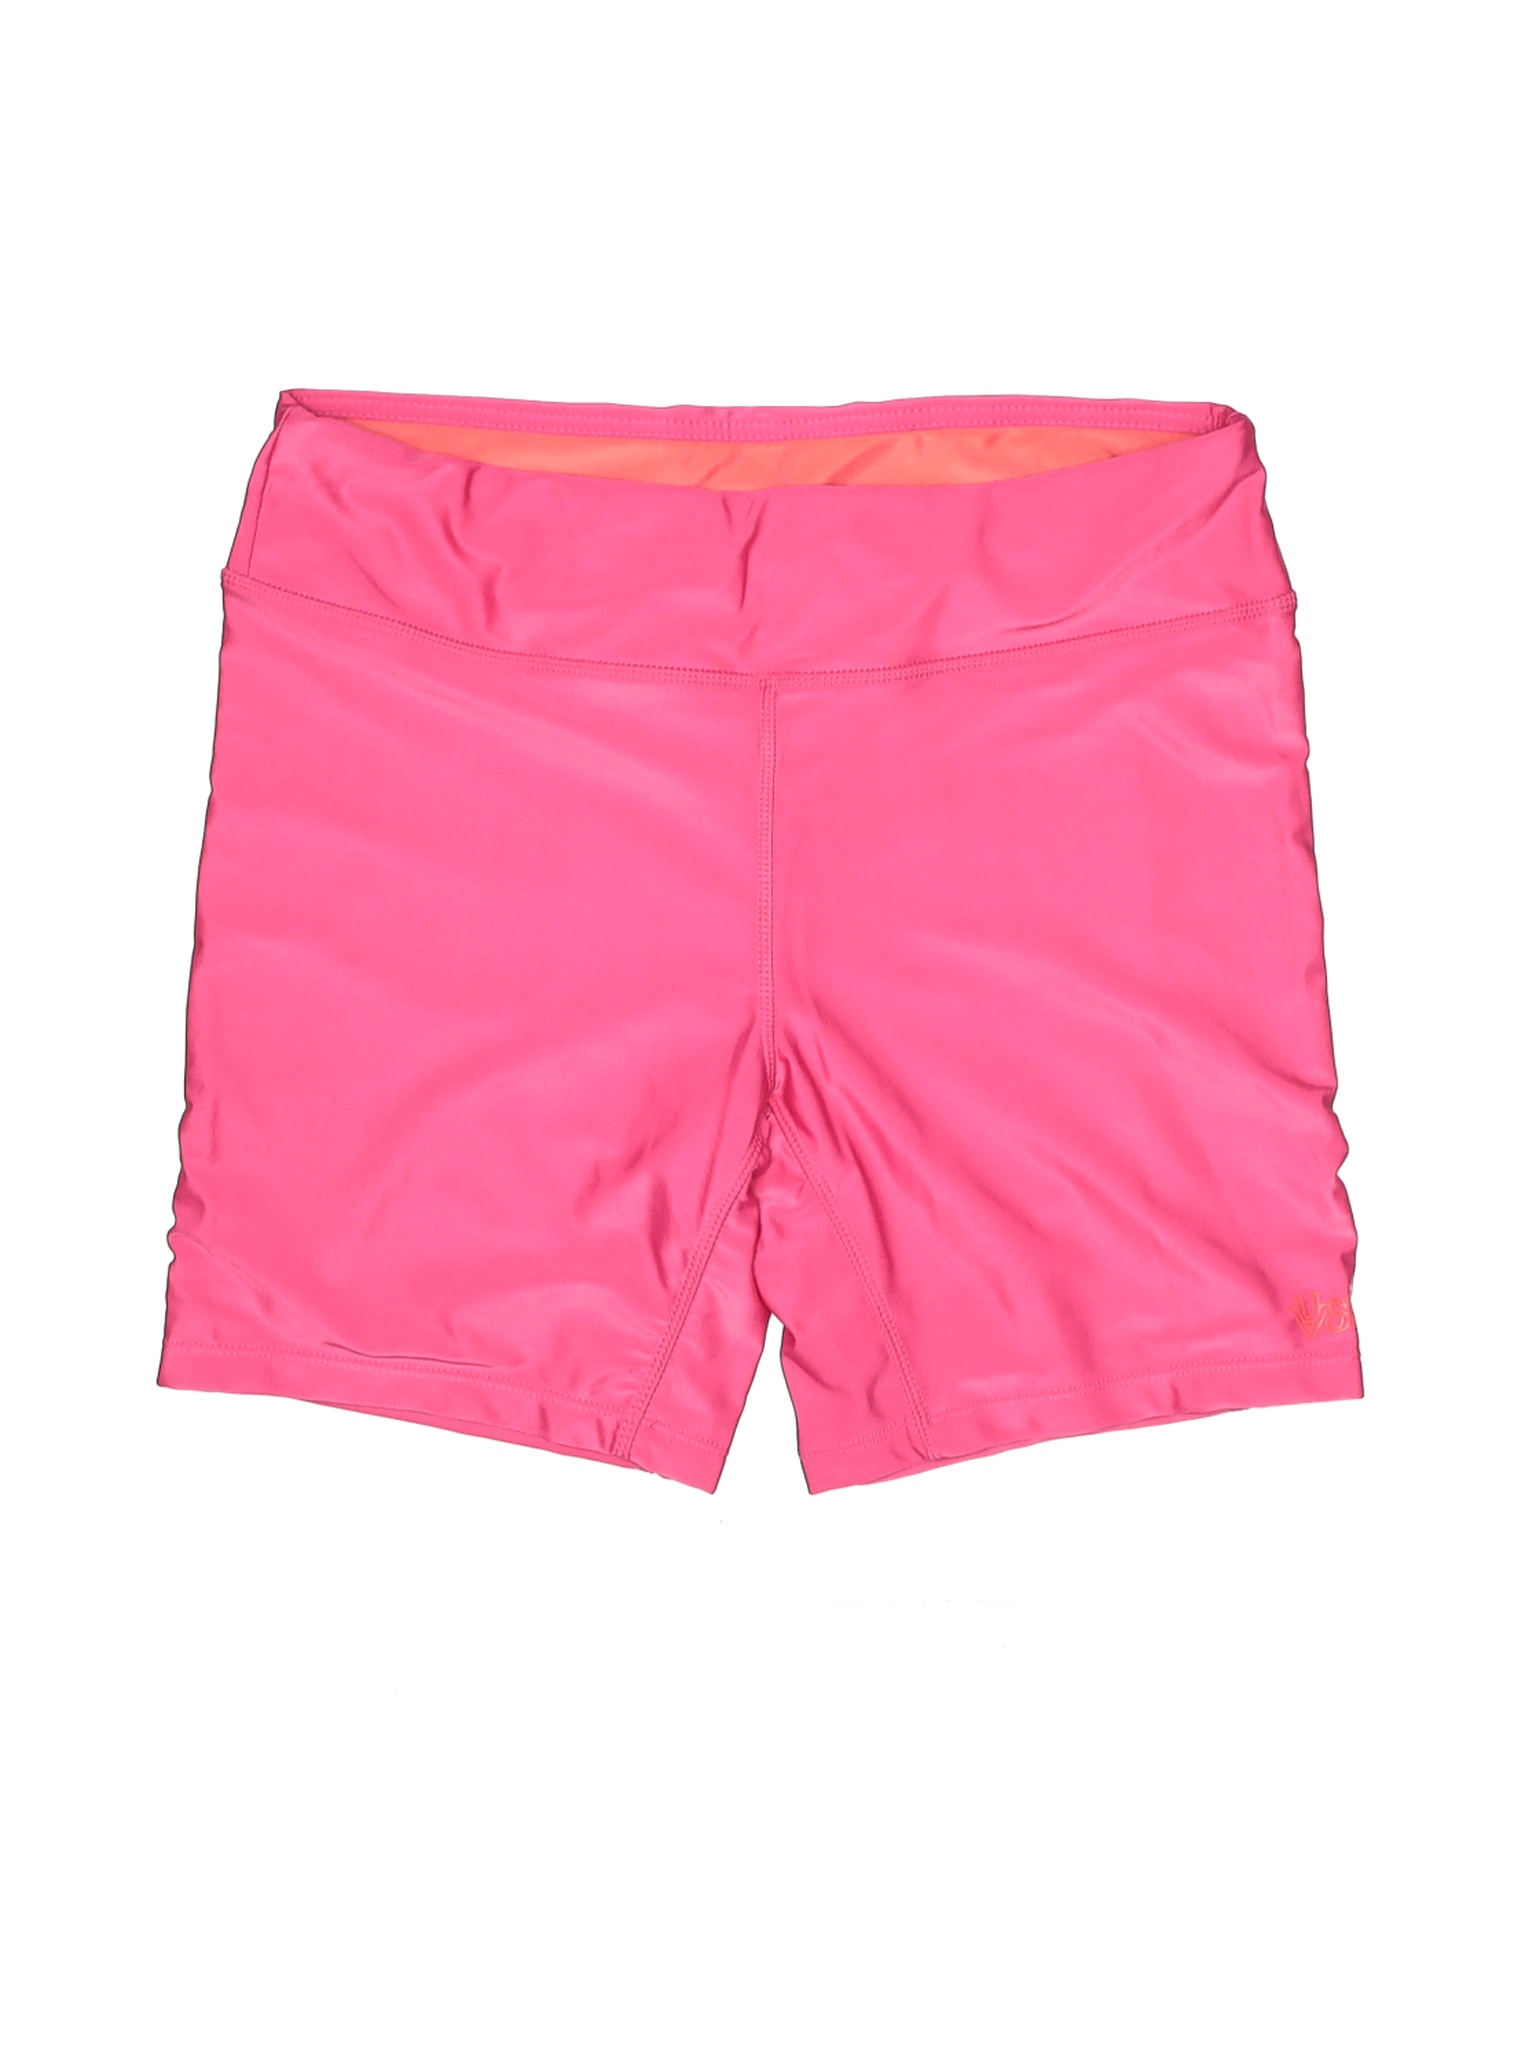 UV Skinz Women Pink Swimsuit Bottoms L | eBay